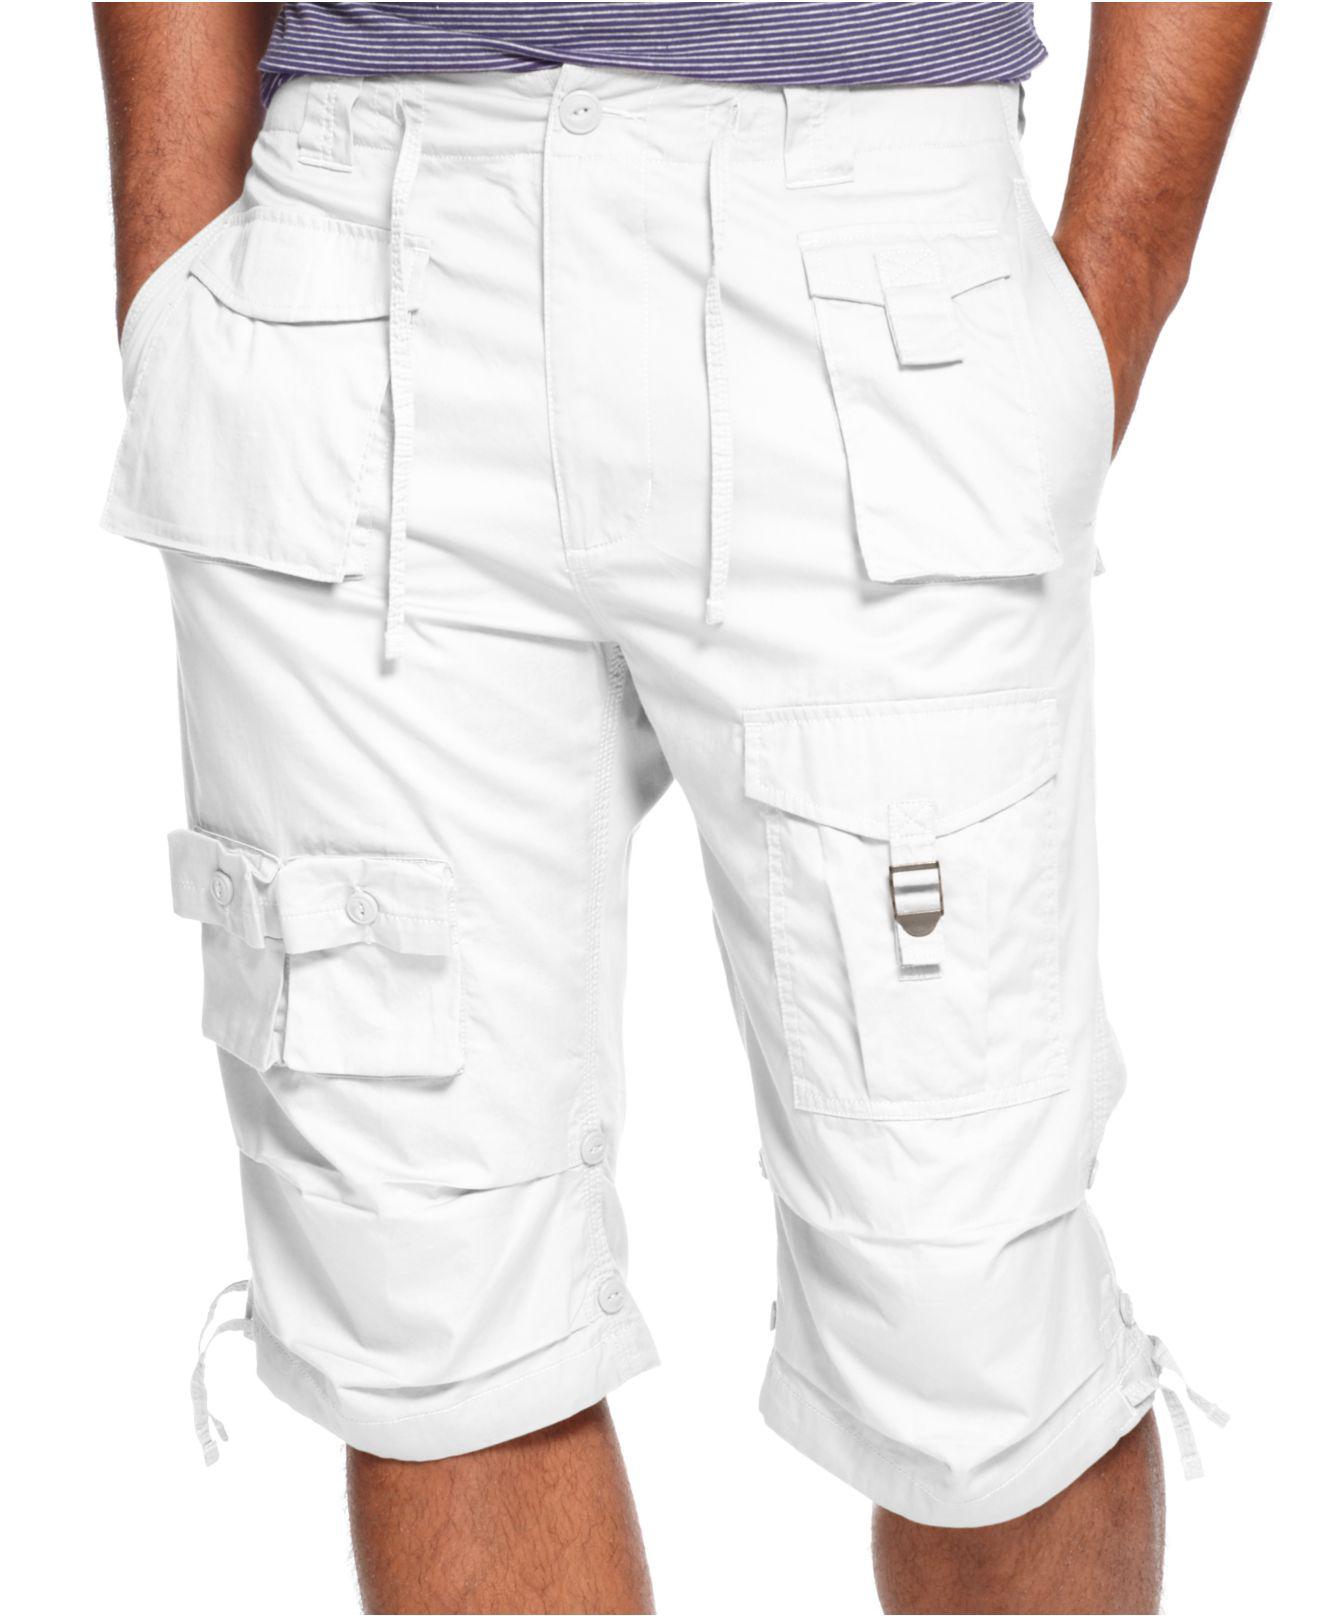 Lyst Sean John Shorts Classic Flight Cargo Shorts In White For Men Save 50 72463768115942